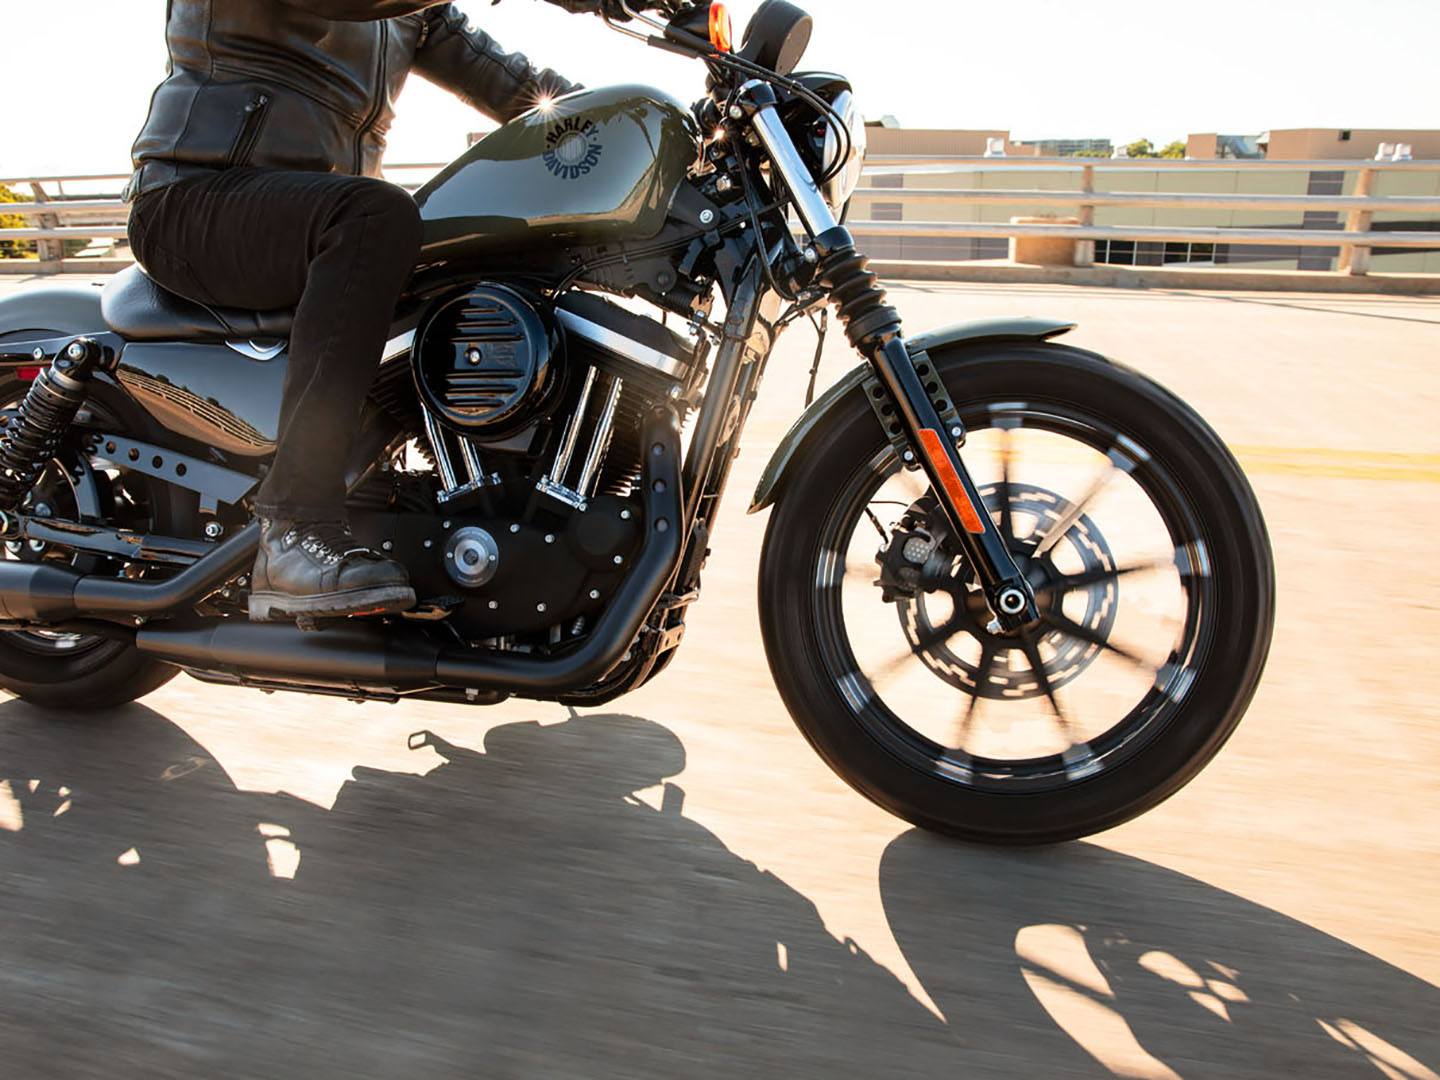 2021 Harley-Davidson Iron 883™ in Carrollton, Texas - Photo 9